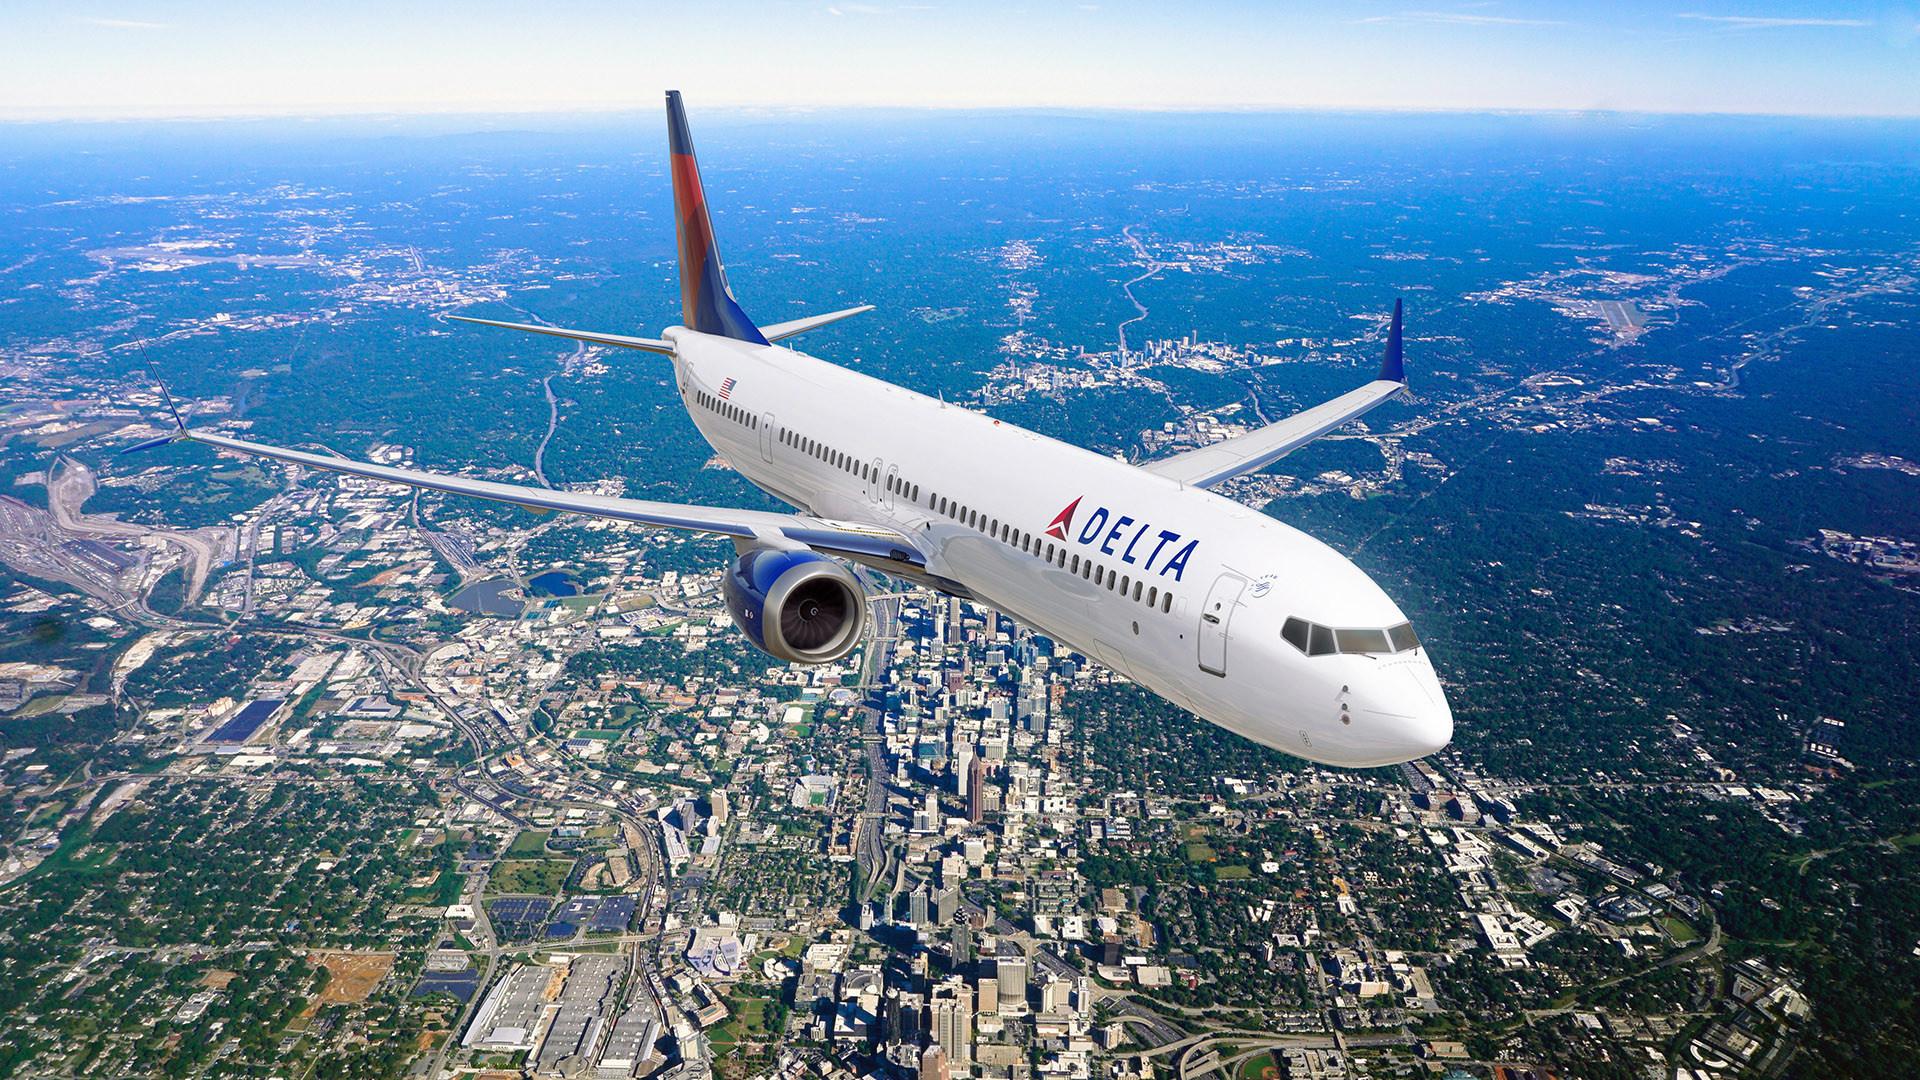 Delta Air Lines Promo Image